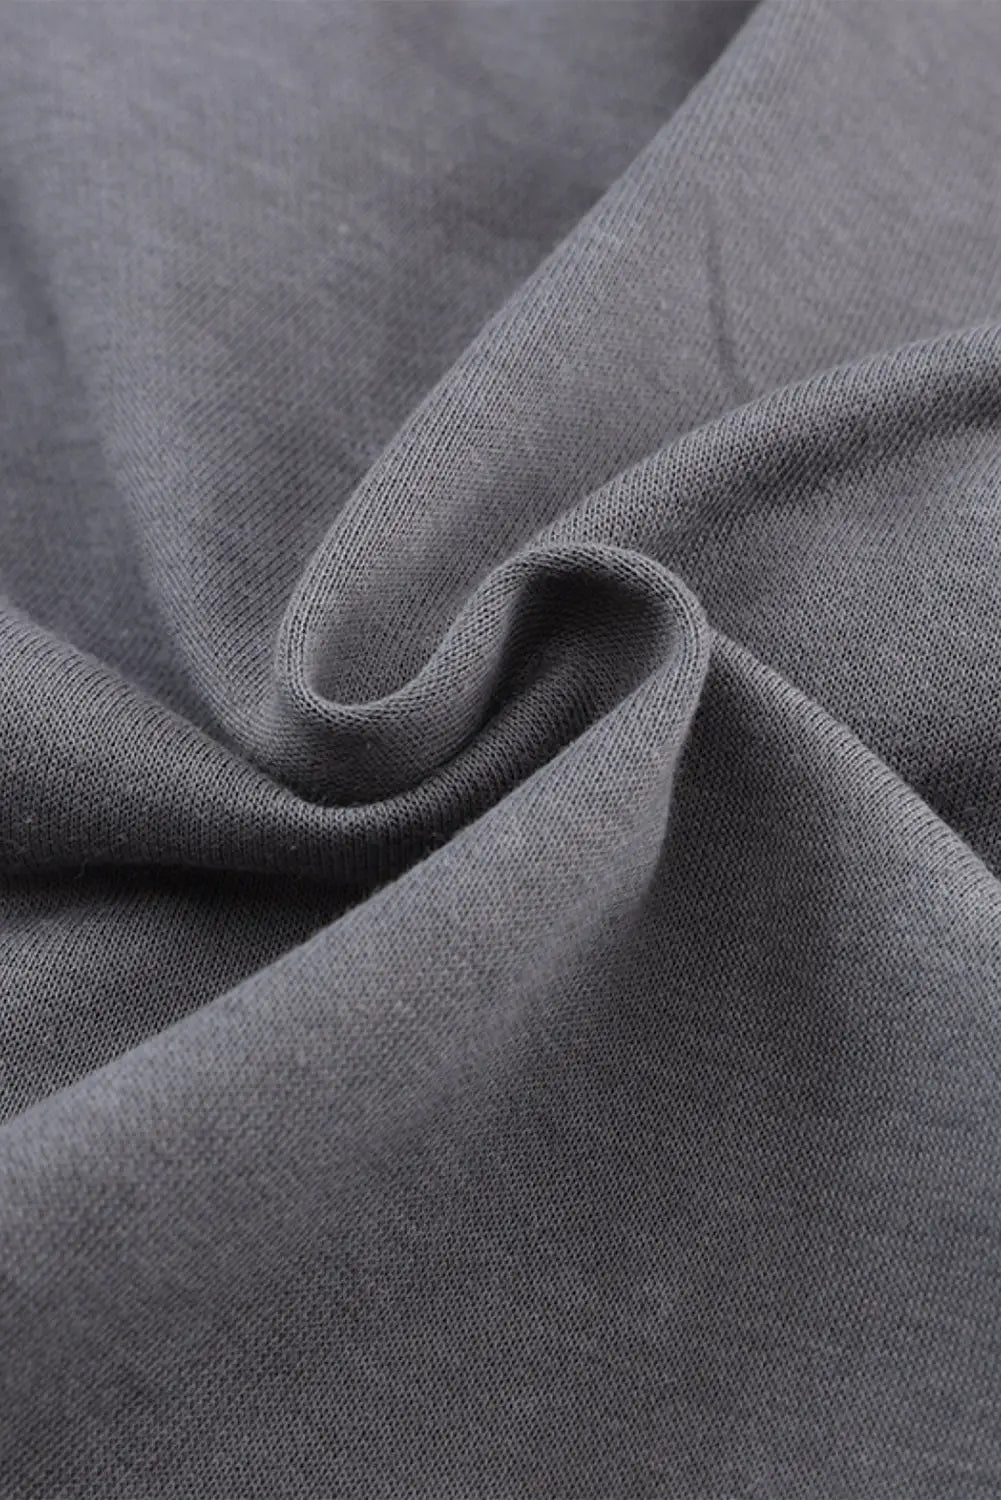 Gray exposed seam twist open back oversized sweatshirt - sweatshirts & hoodies